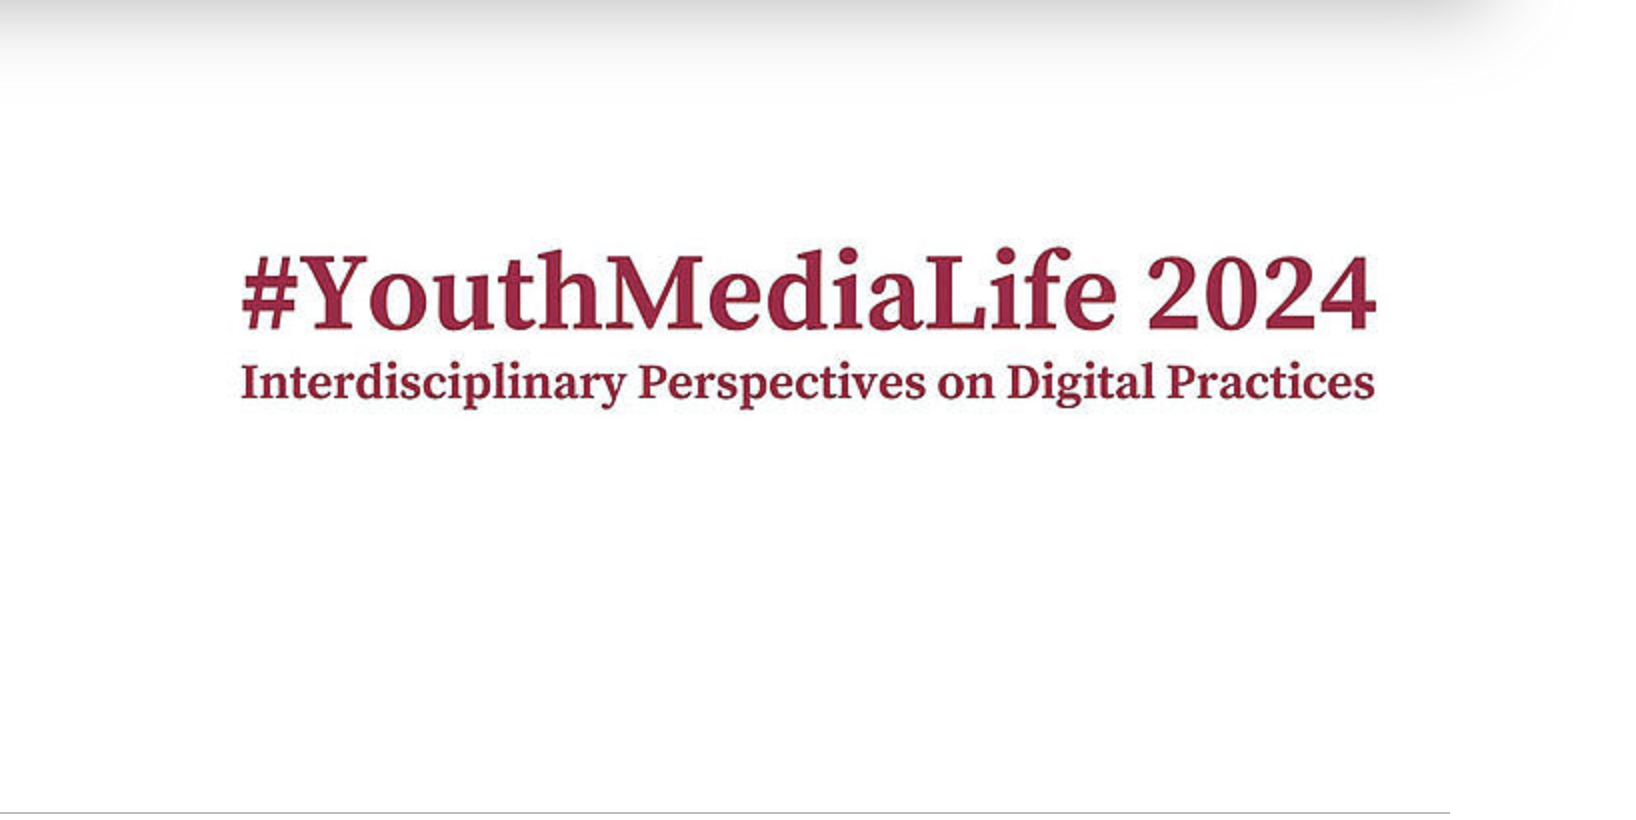 CfP: #YouthMediaLife 2024. Interdisziplinäre Perspektiven auf digitale Praktiken. 25.03.-28.03.2024 Wien